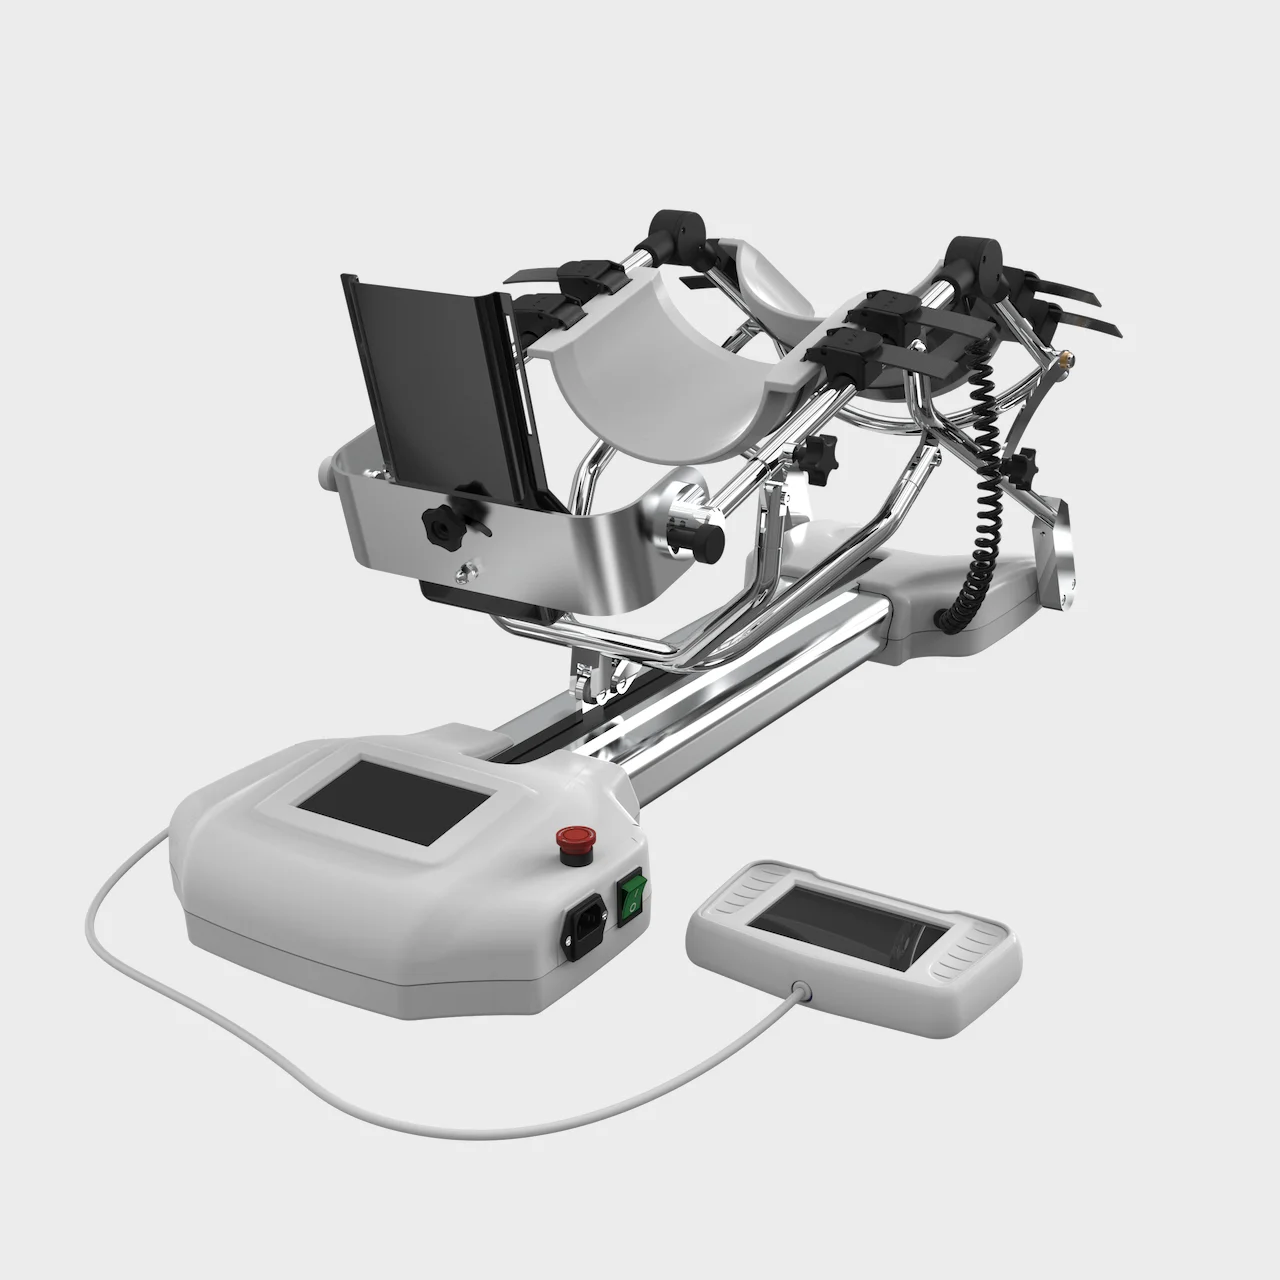 Medical leg rehabilitation equipment